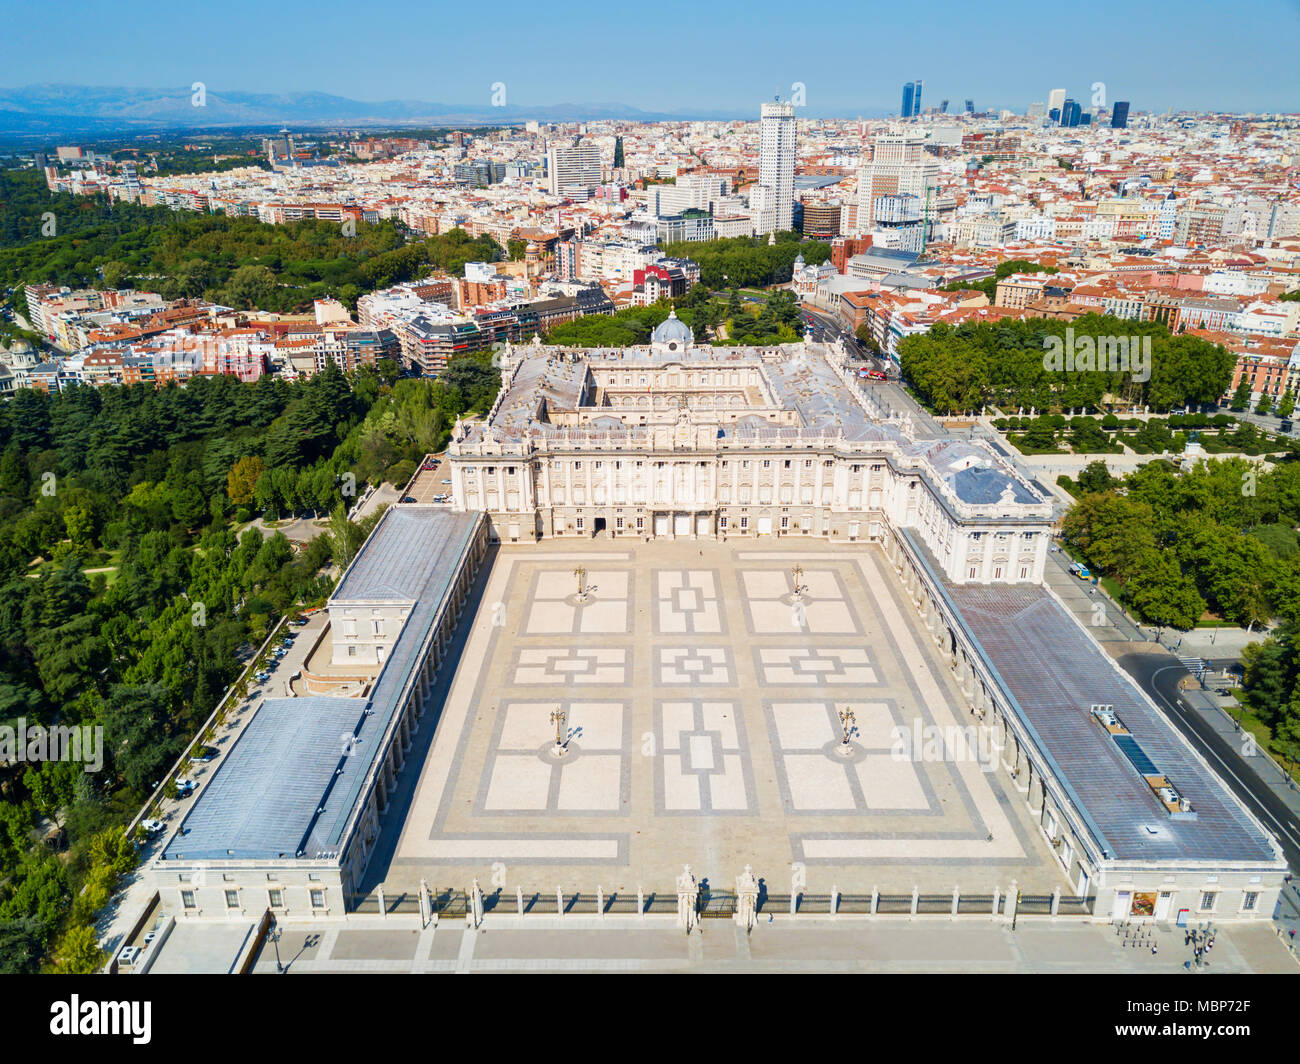 el-palacio-real-de-madrid-vista-panoramica-aerea-el-palacio-real-de-madrid-es-la-residencia-oficial-de-la-familia-real-espanola-en-madrid-espana-mbp72f.jpg